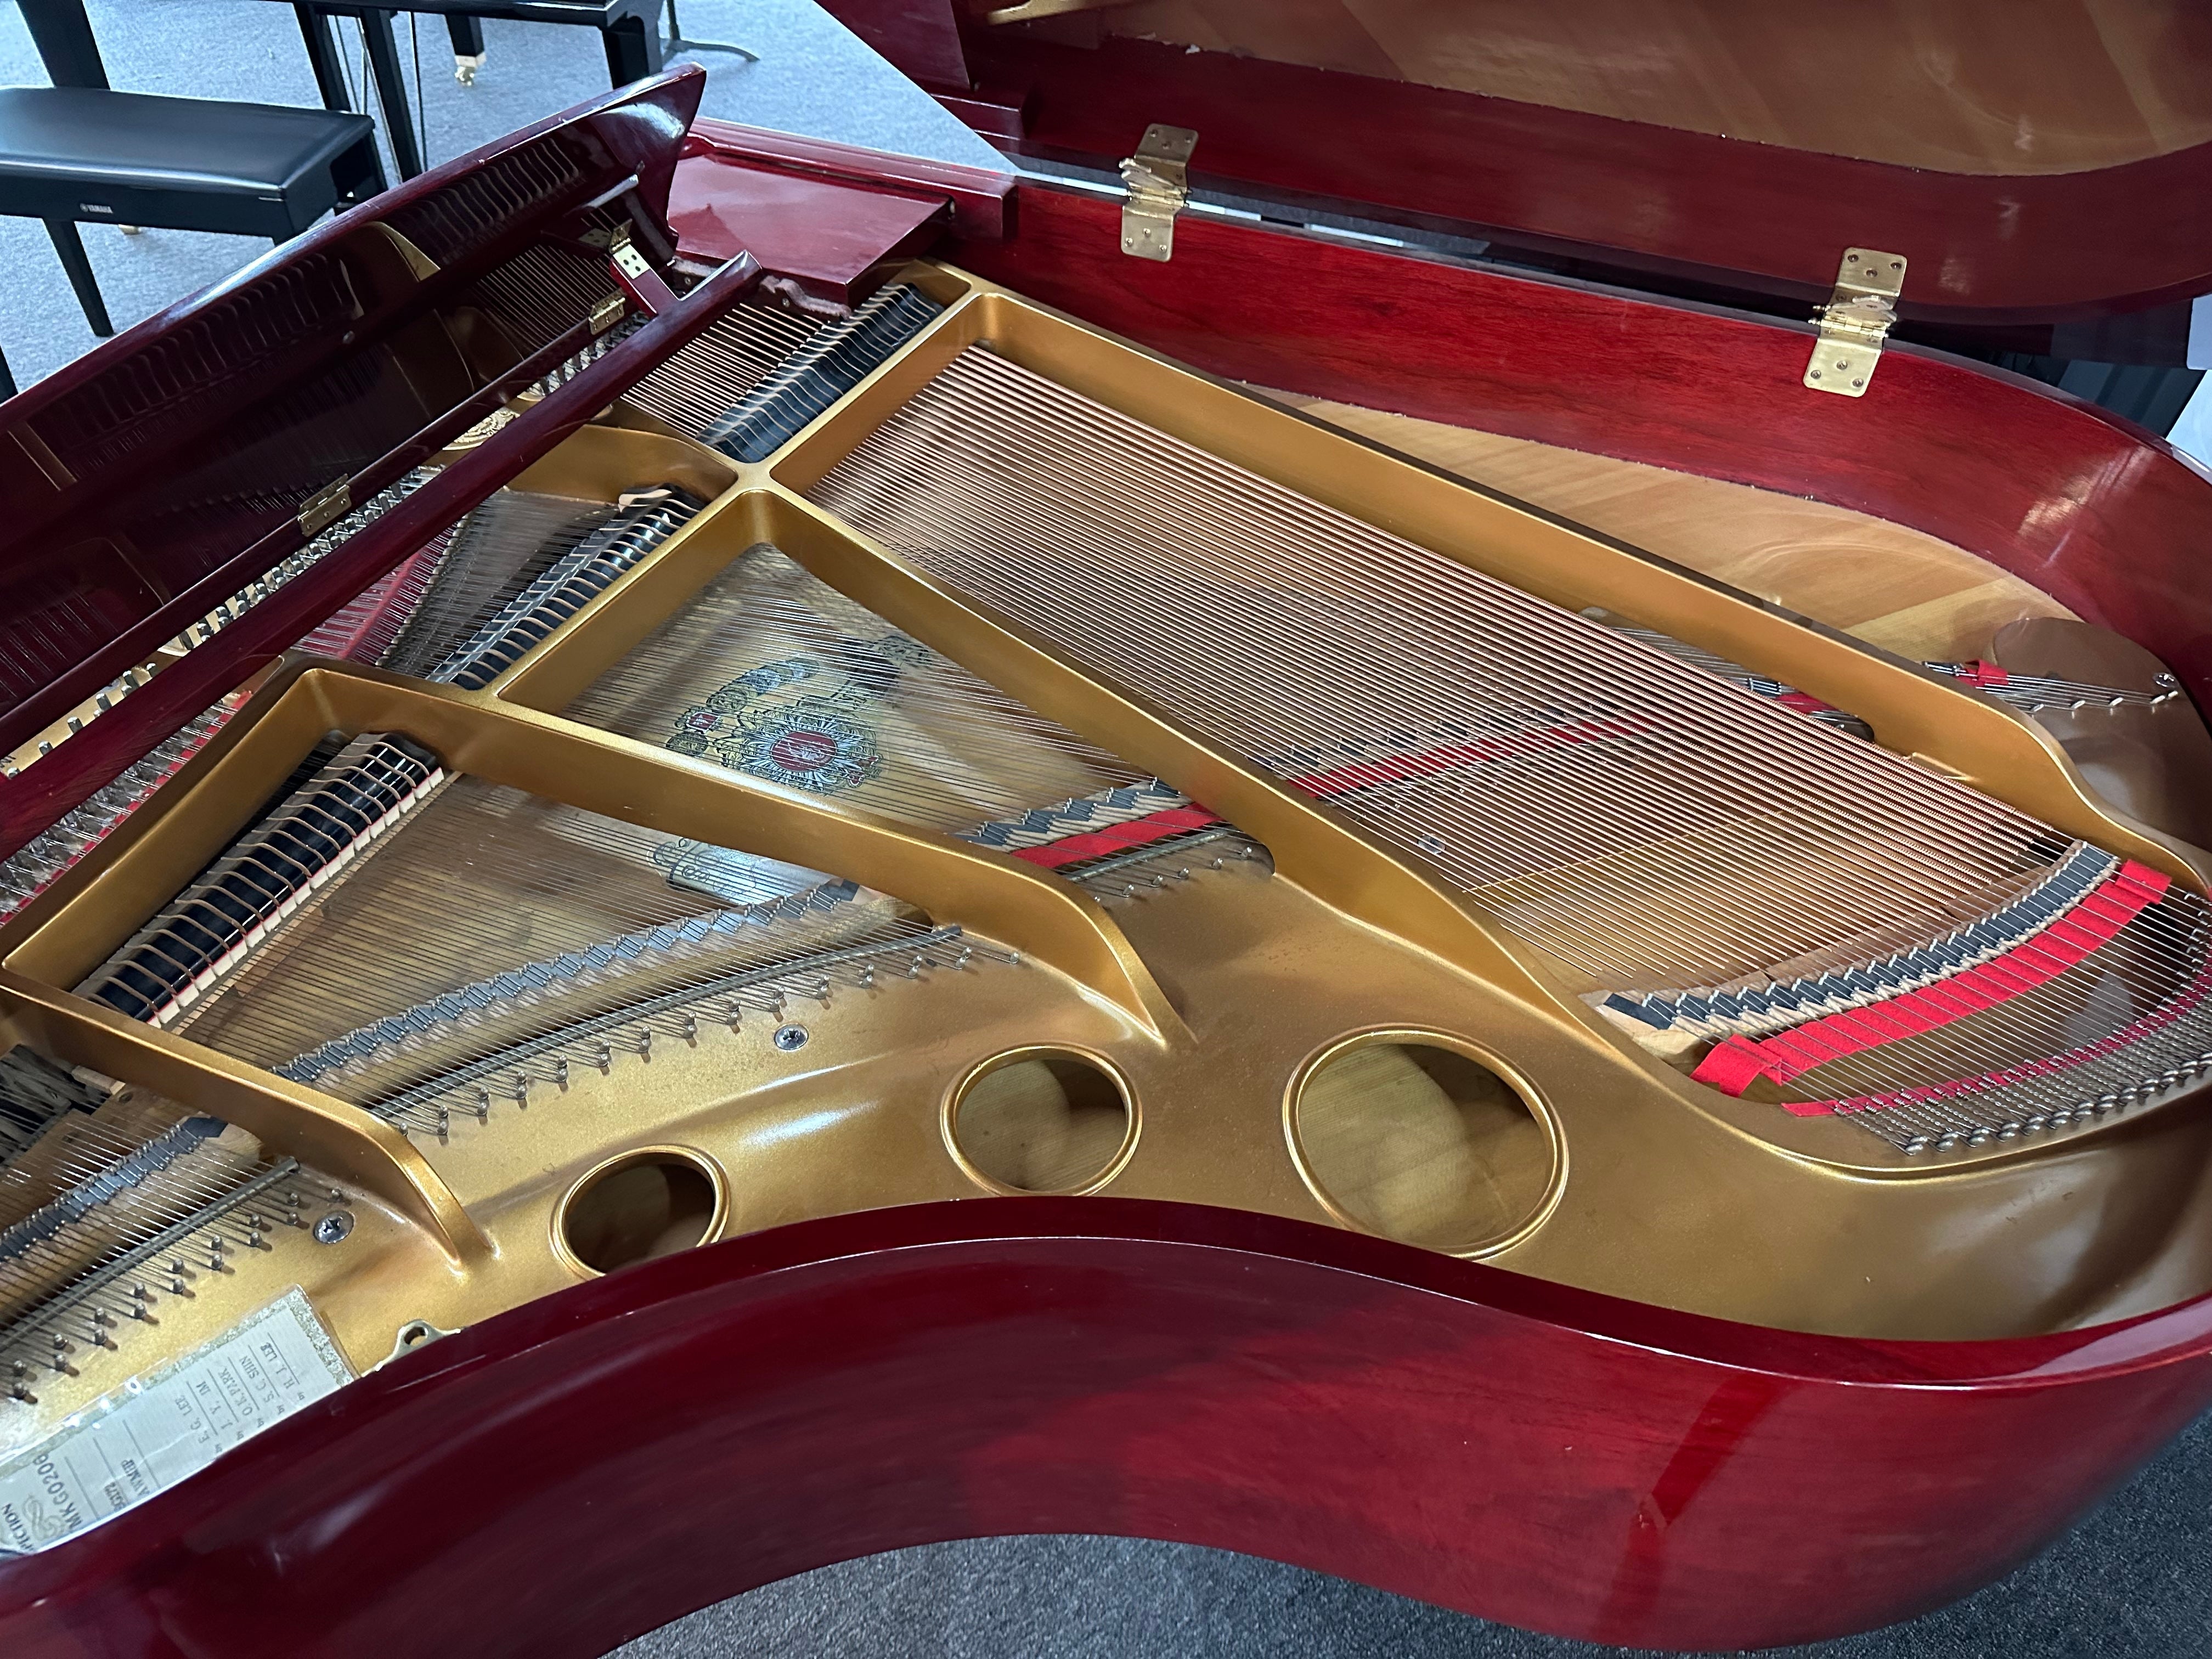 Samick SG-172 5'8" Baby Grand Piano in Polished Mahogany Finish